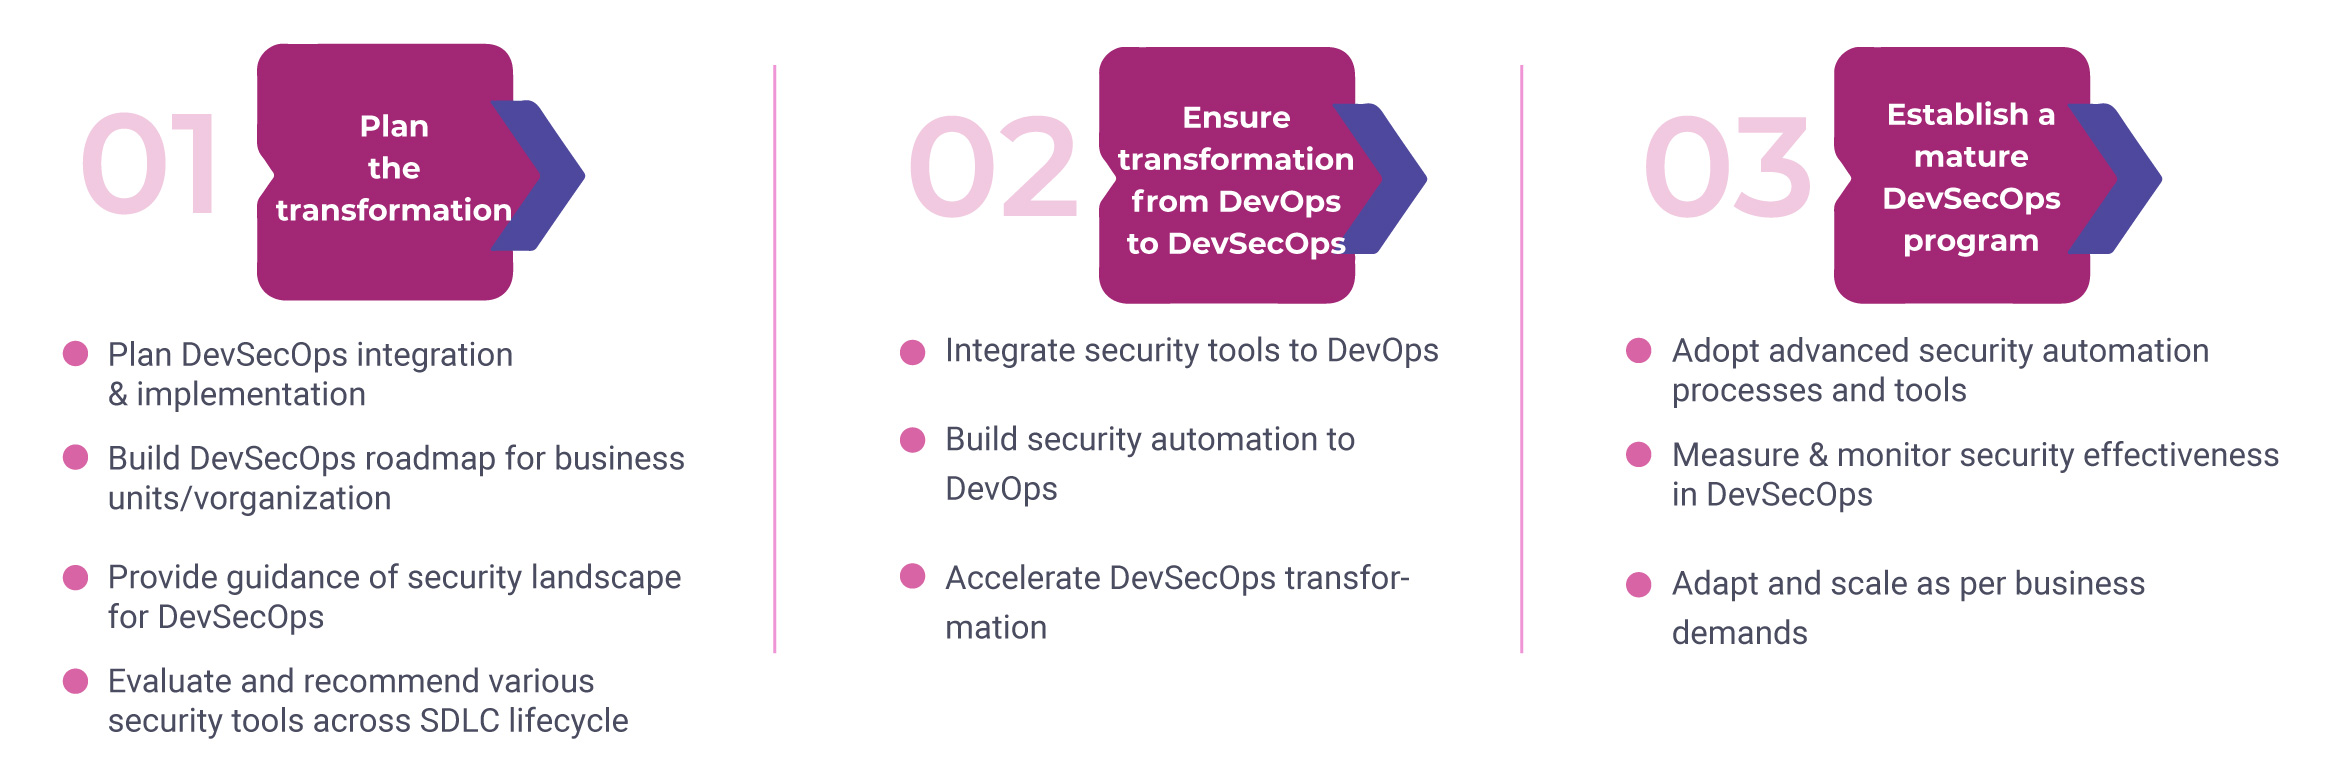 Ensuring application security through DevSecOps